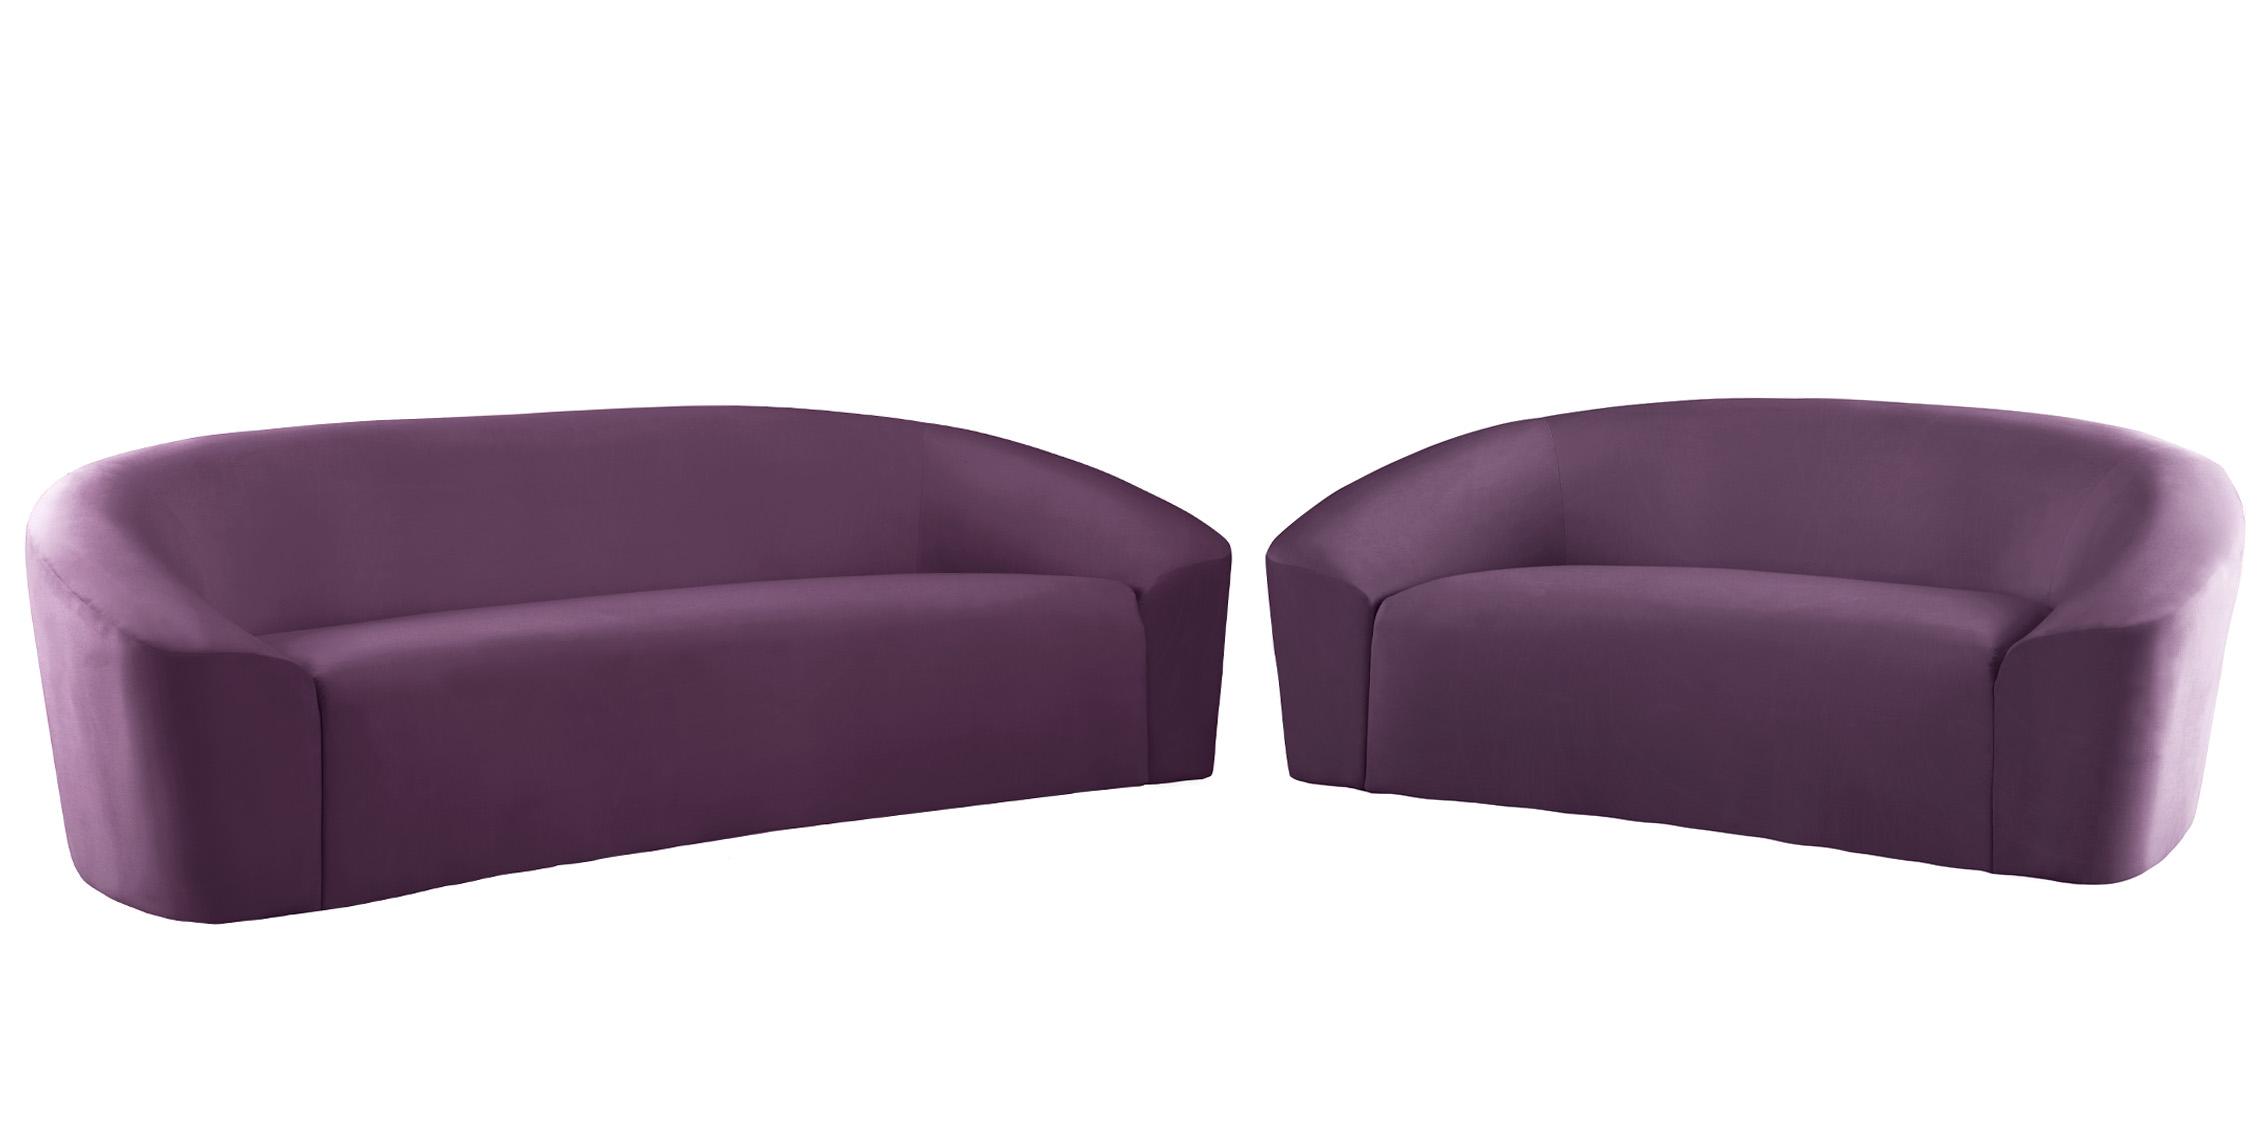 

    
610Purple-S Deep Purple Velvet Sofa RILEY 610Purple-S Meridian Modern Contemporary
